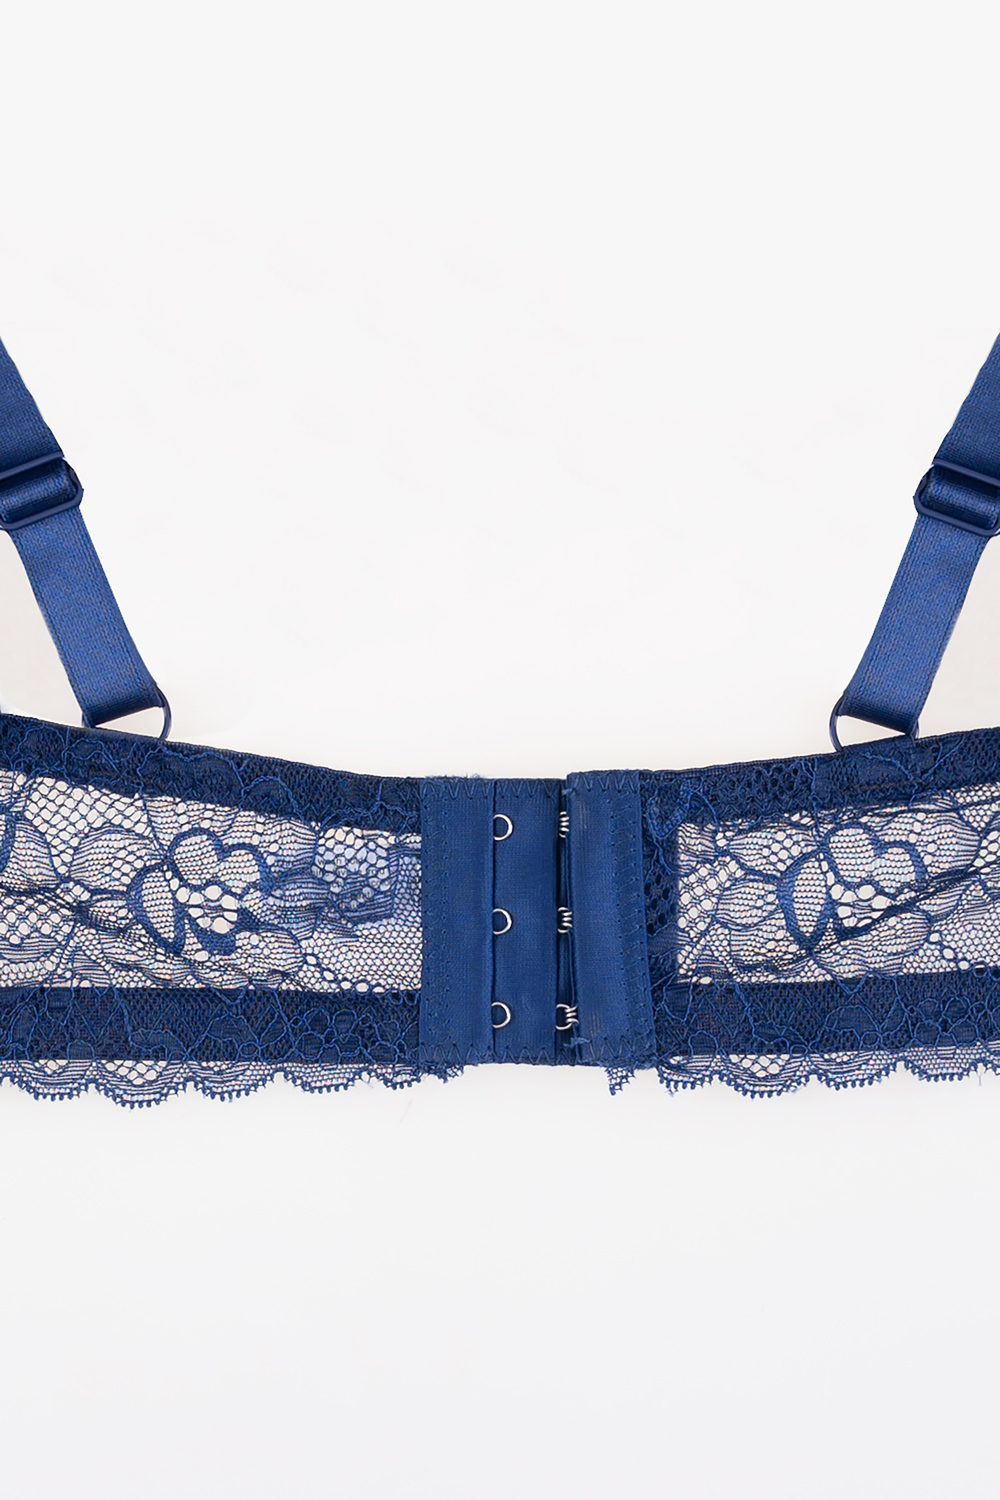 New soft unlined mesh bra Fortuna Blue Navy Kris Line –